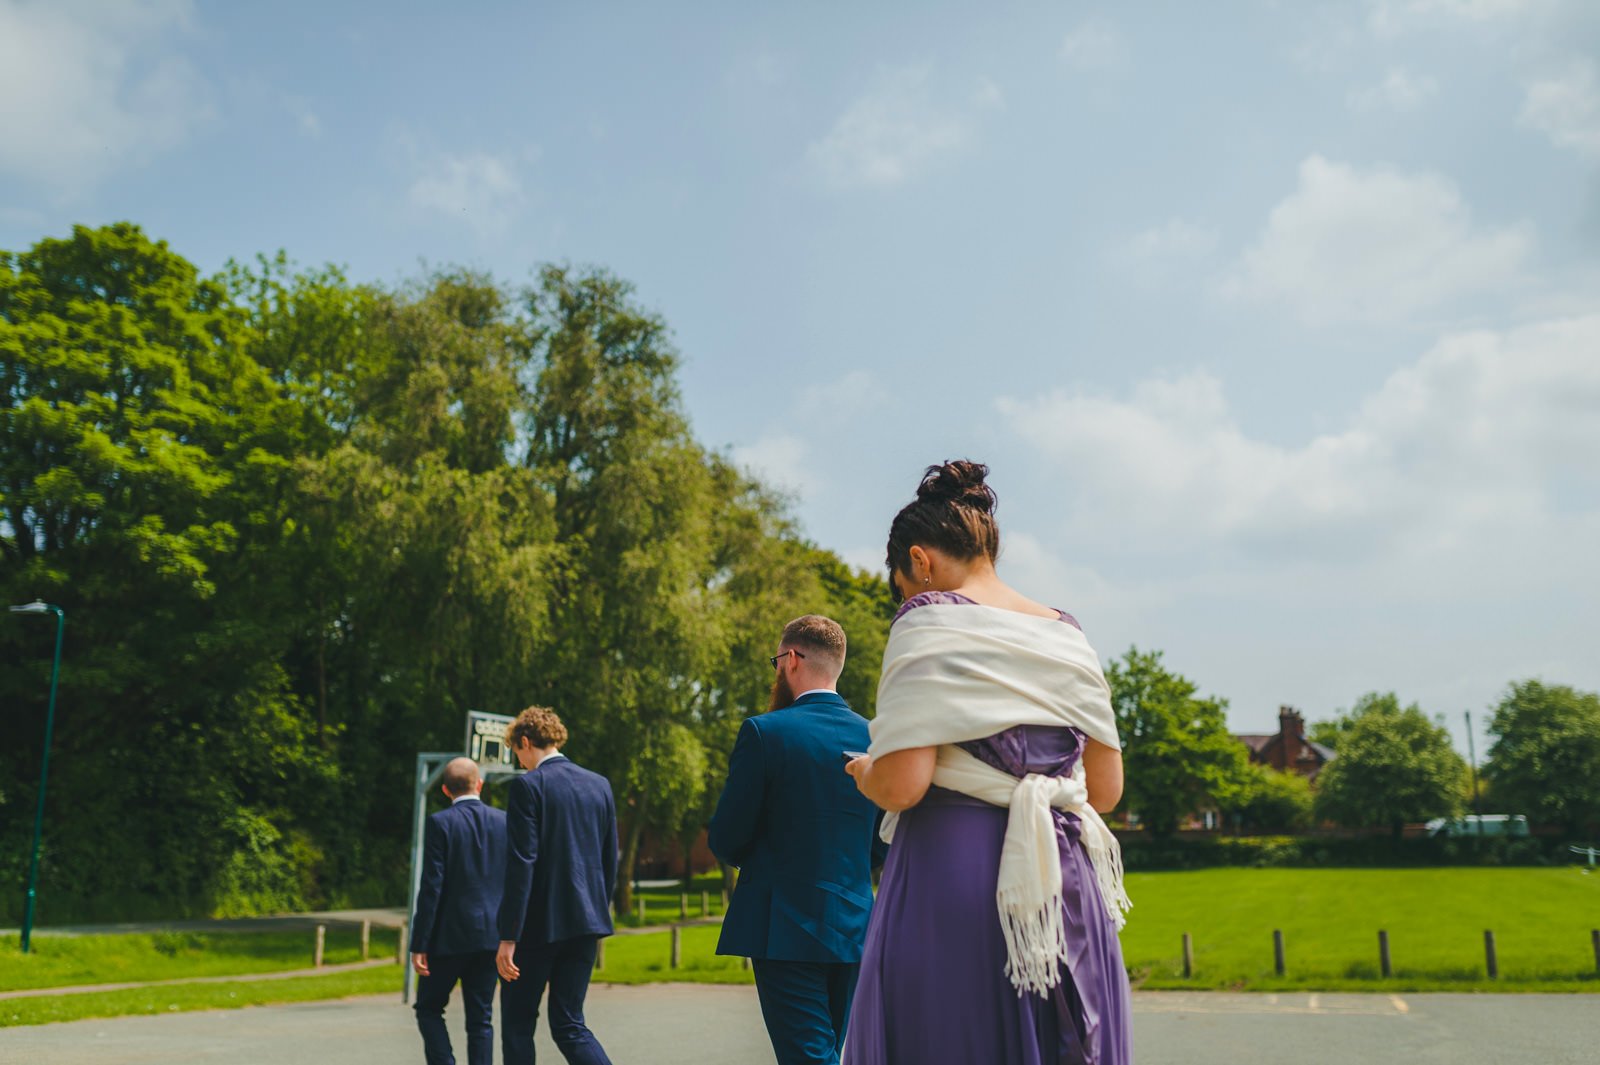 Millers Of Netley wedding, Dorrington, Shrewsbury | Emma + Ben 9